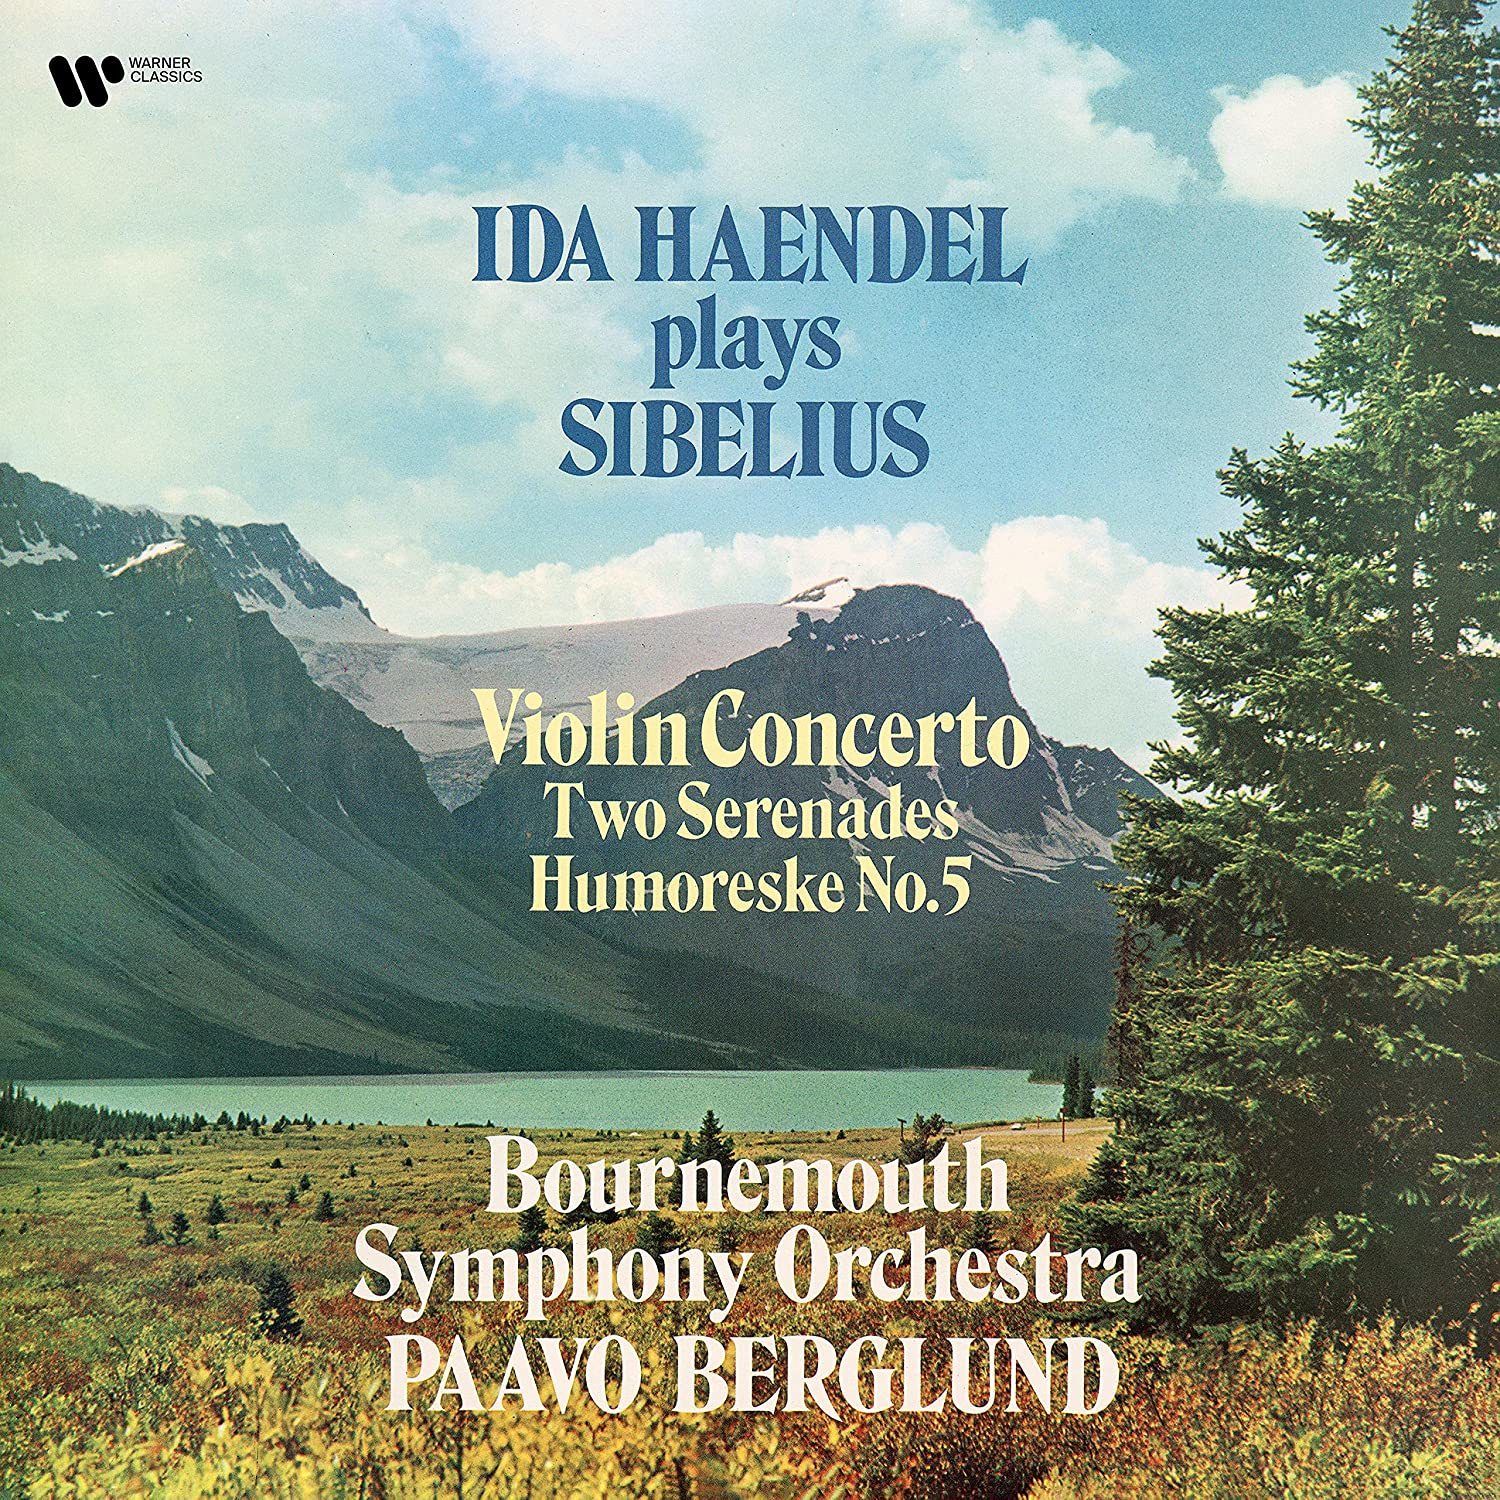 Виниловая пластинка Ida Haendel, Paavo Berglund/Bournemouth Orchestra, Sibelius: Violin Concerto, 2 Serenades, Humoreske No. 5 (0190296733819)